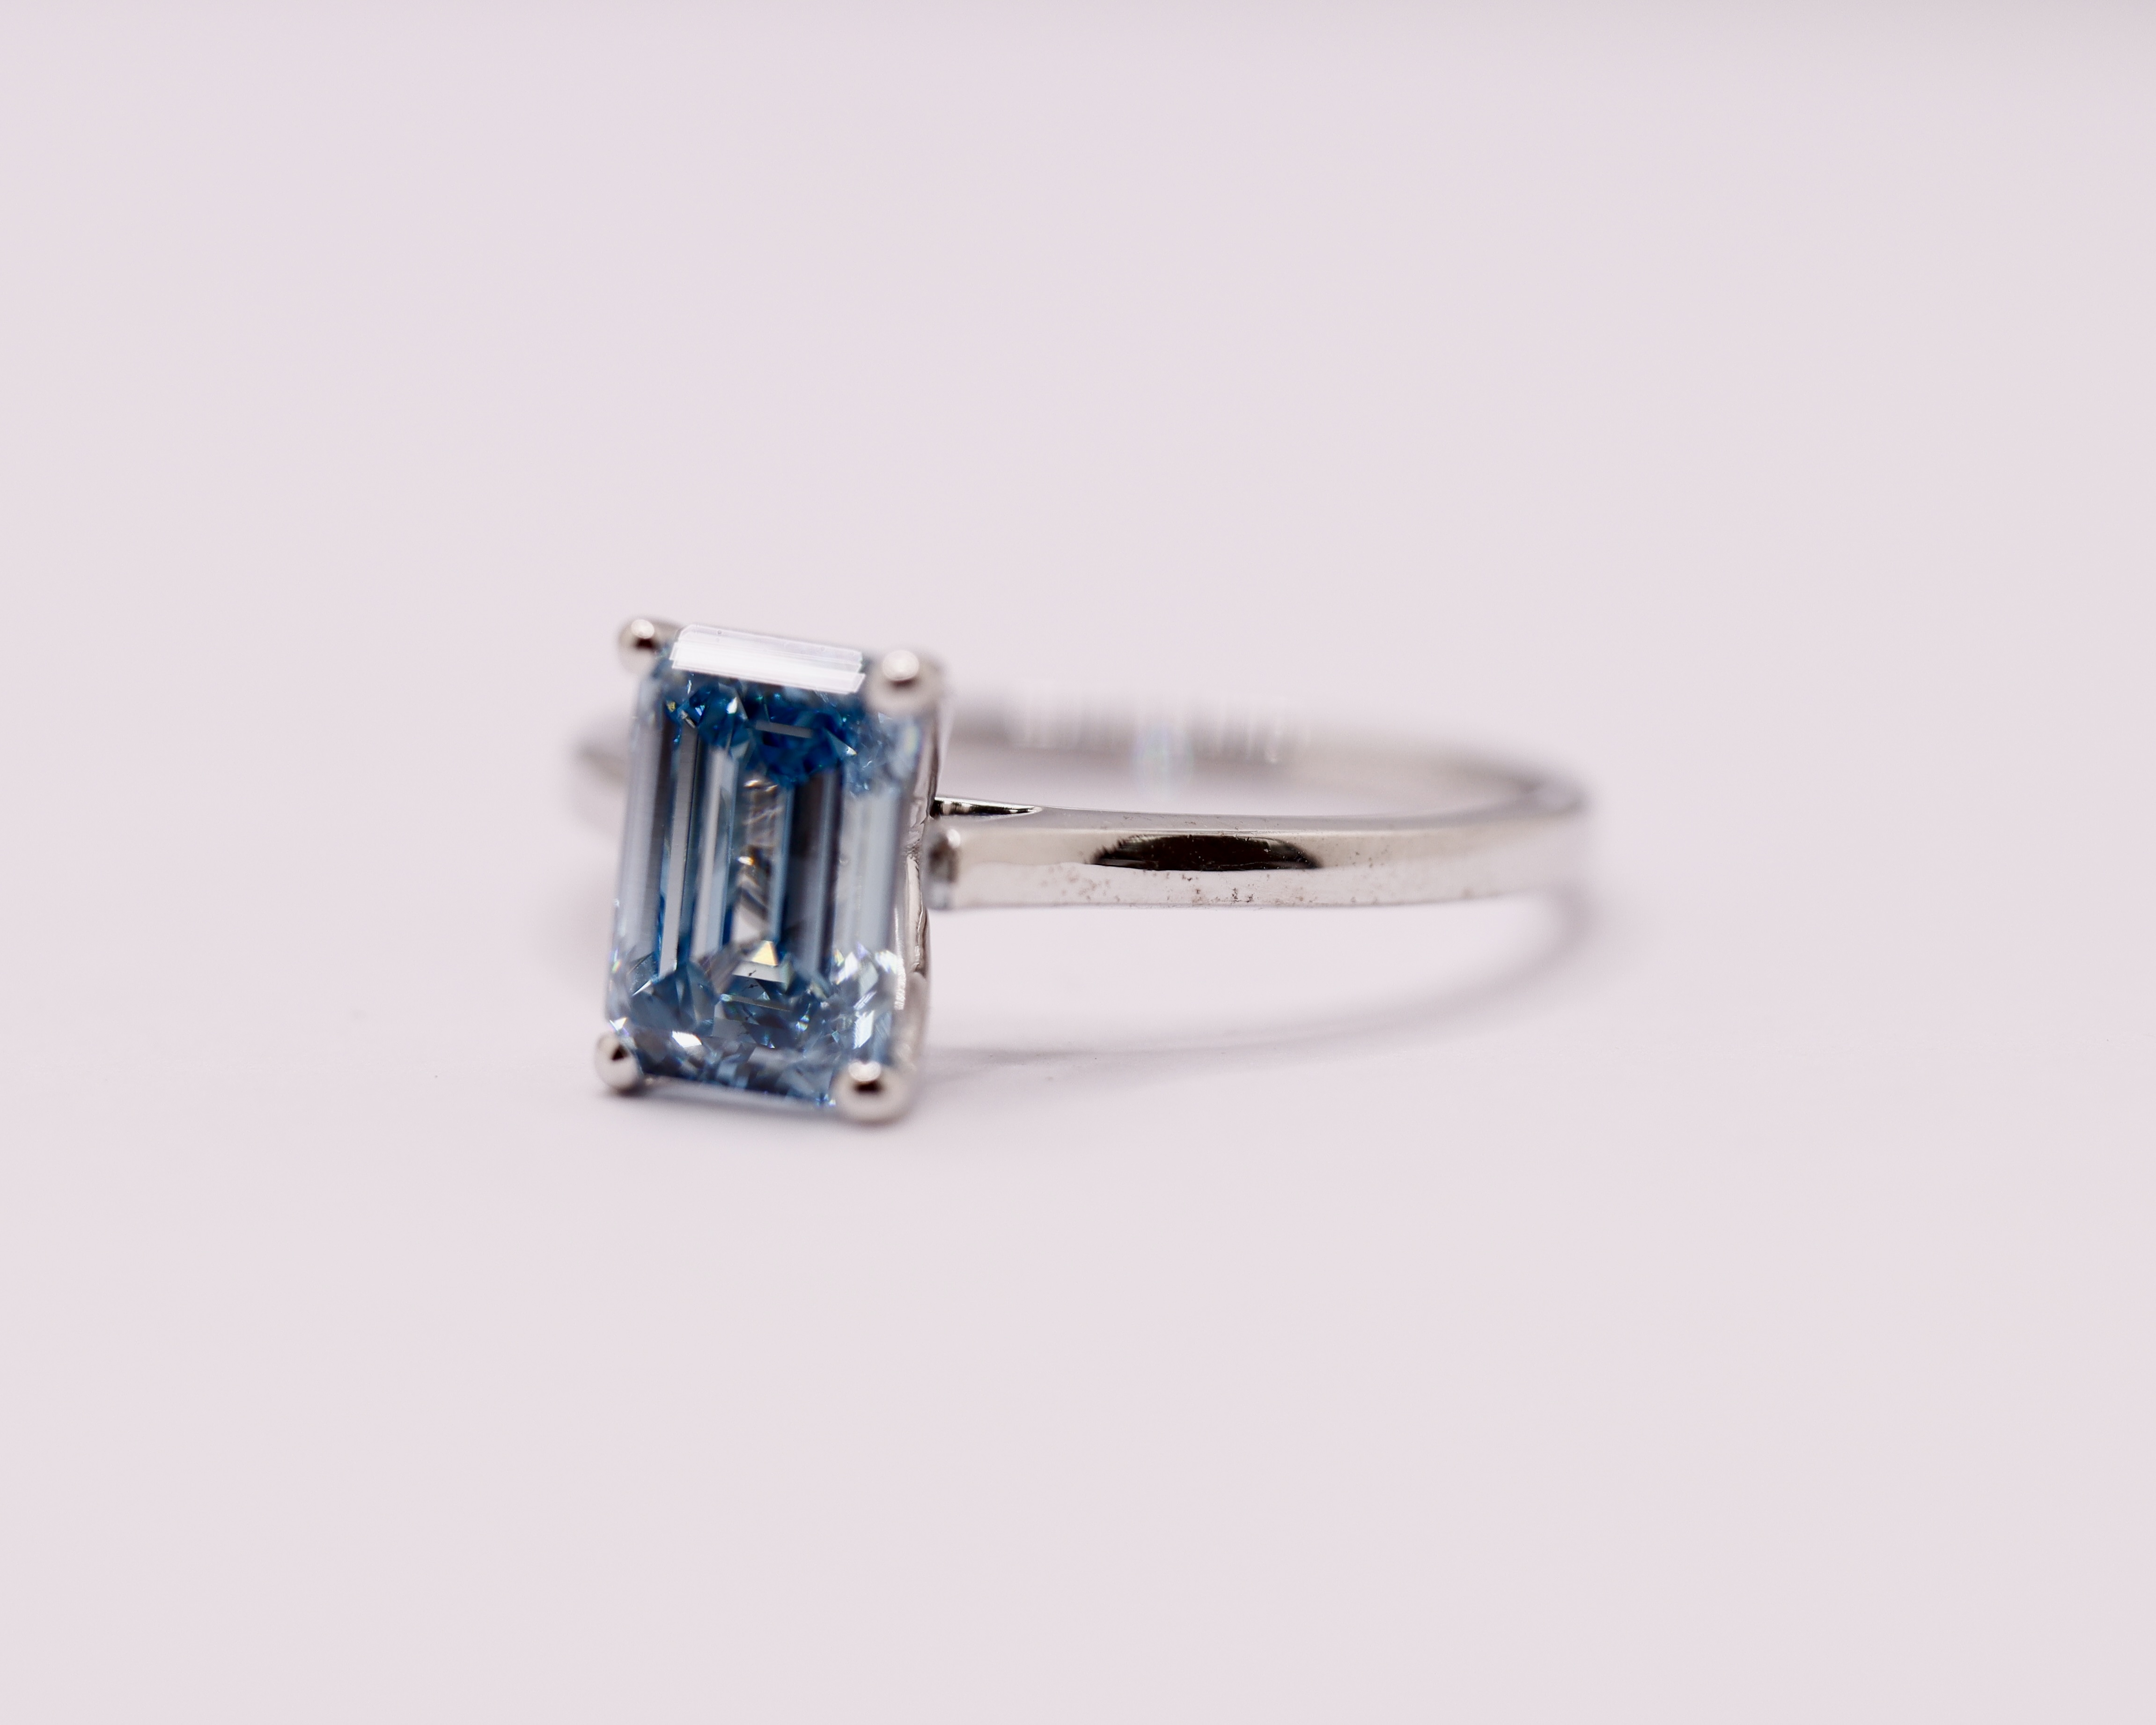 ** ON SALE ** Fancy Blue Emerald Cut 1.50 Carat Diamond 18Kt White Gold Ring -VS1 Clarity - Image 2 of 7